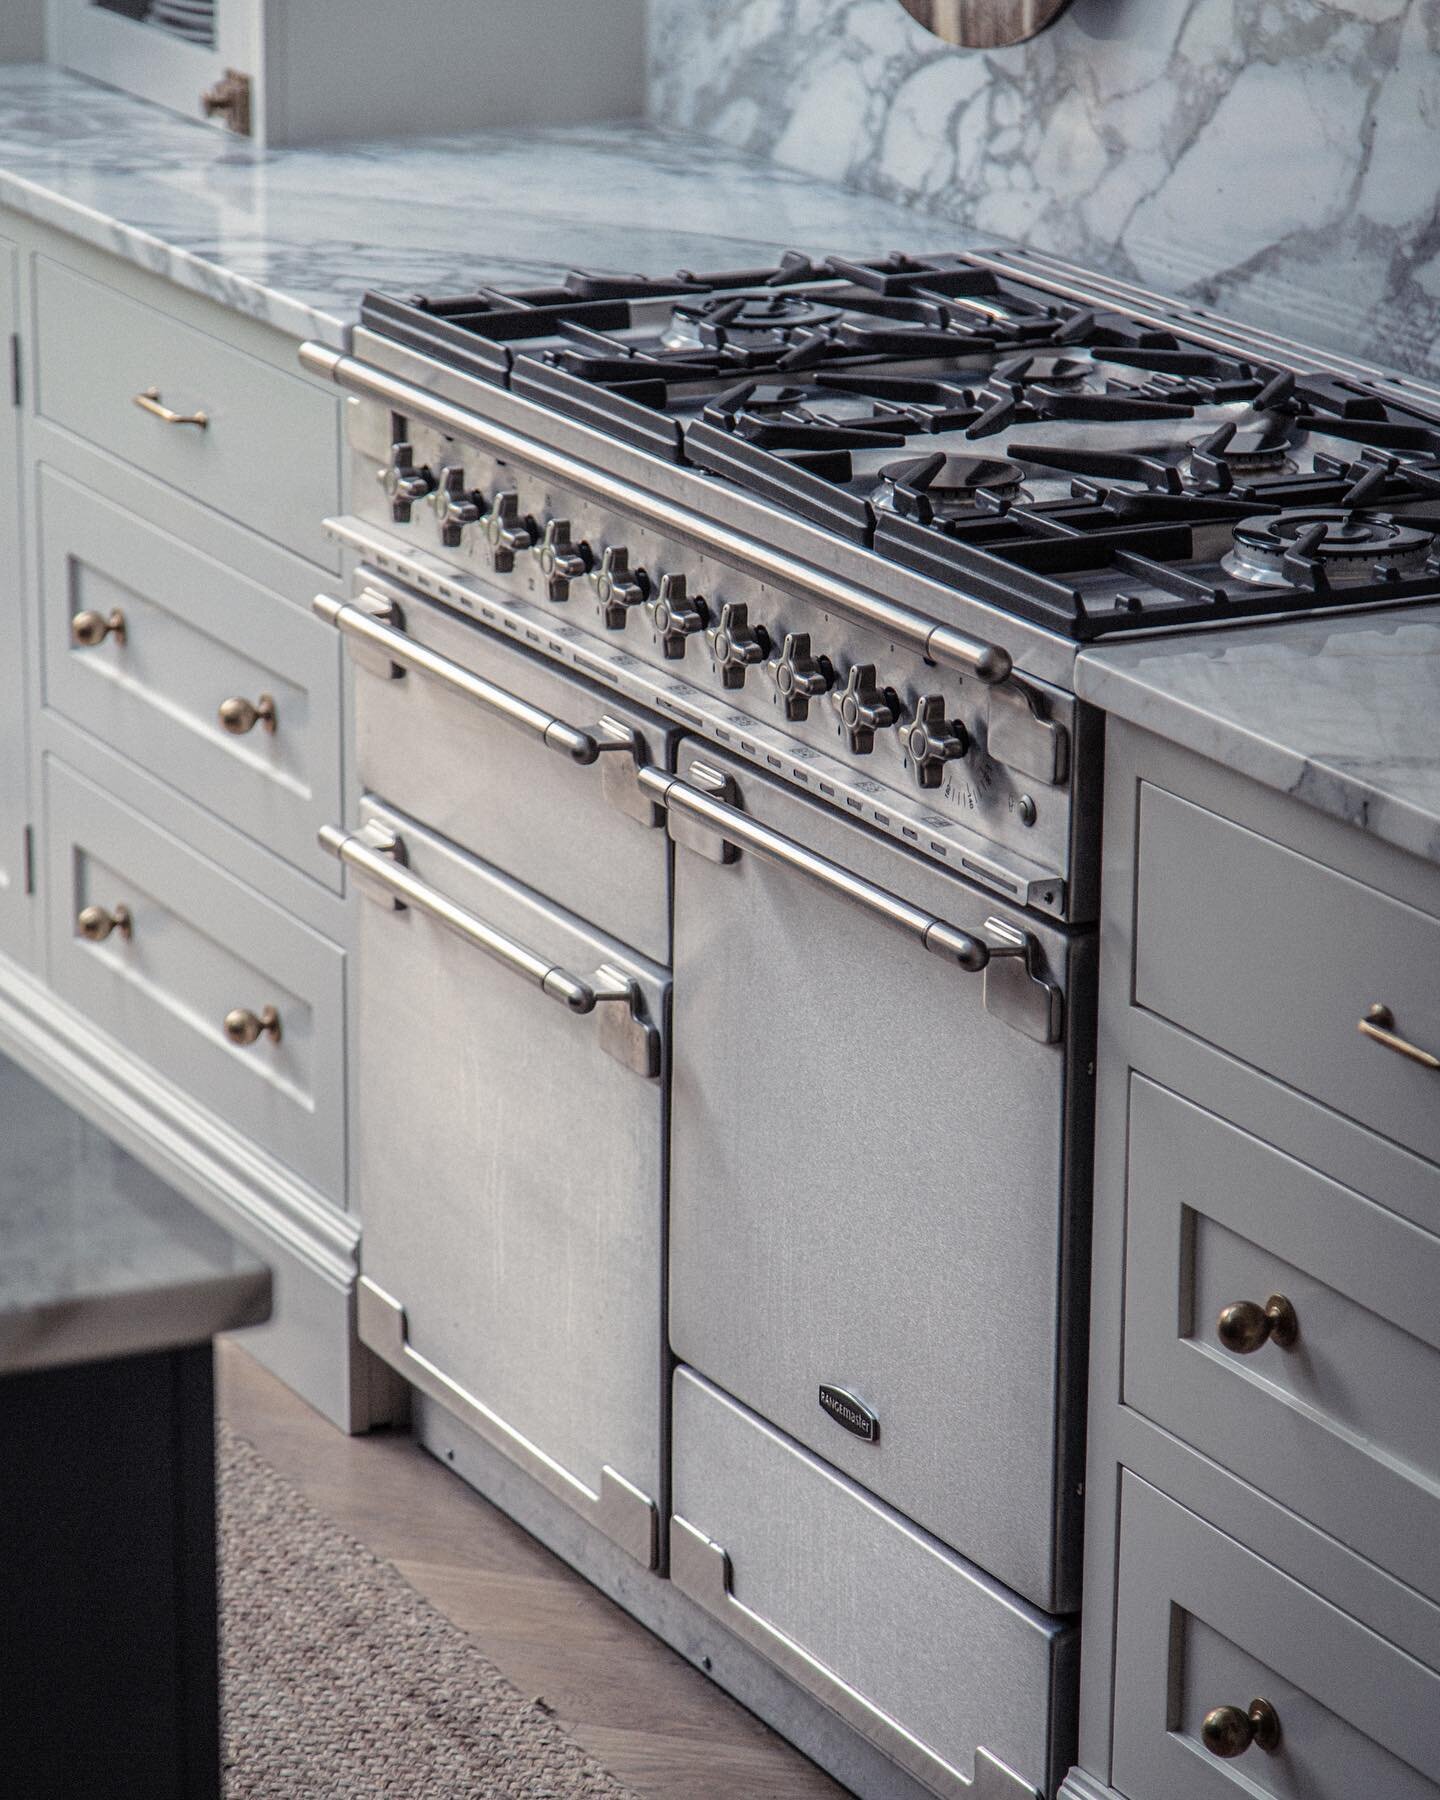 The sleek #rangemaster cooker completes every Olaf kitchen 

#kitchen #rangemaster #interiordesign #bespokekitchen #kitcheninspo #kitchendesign #kitchenrenovation #homerenovation #homedesign